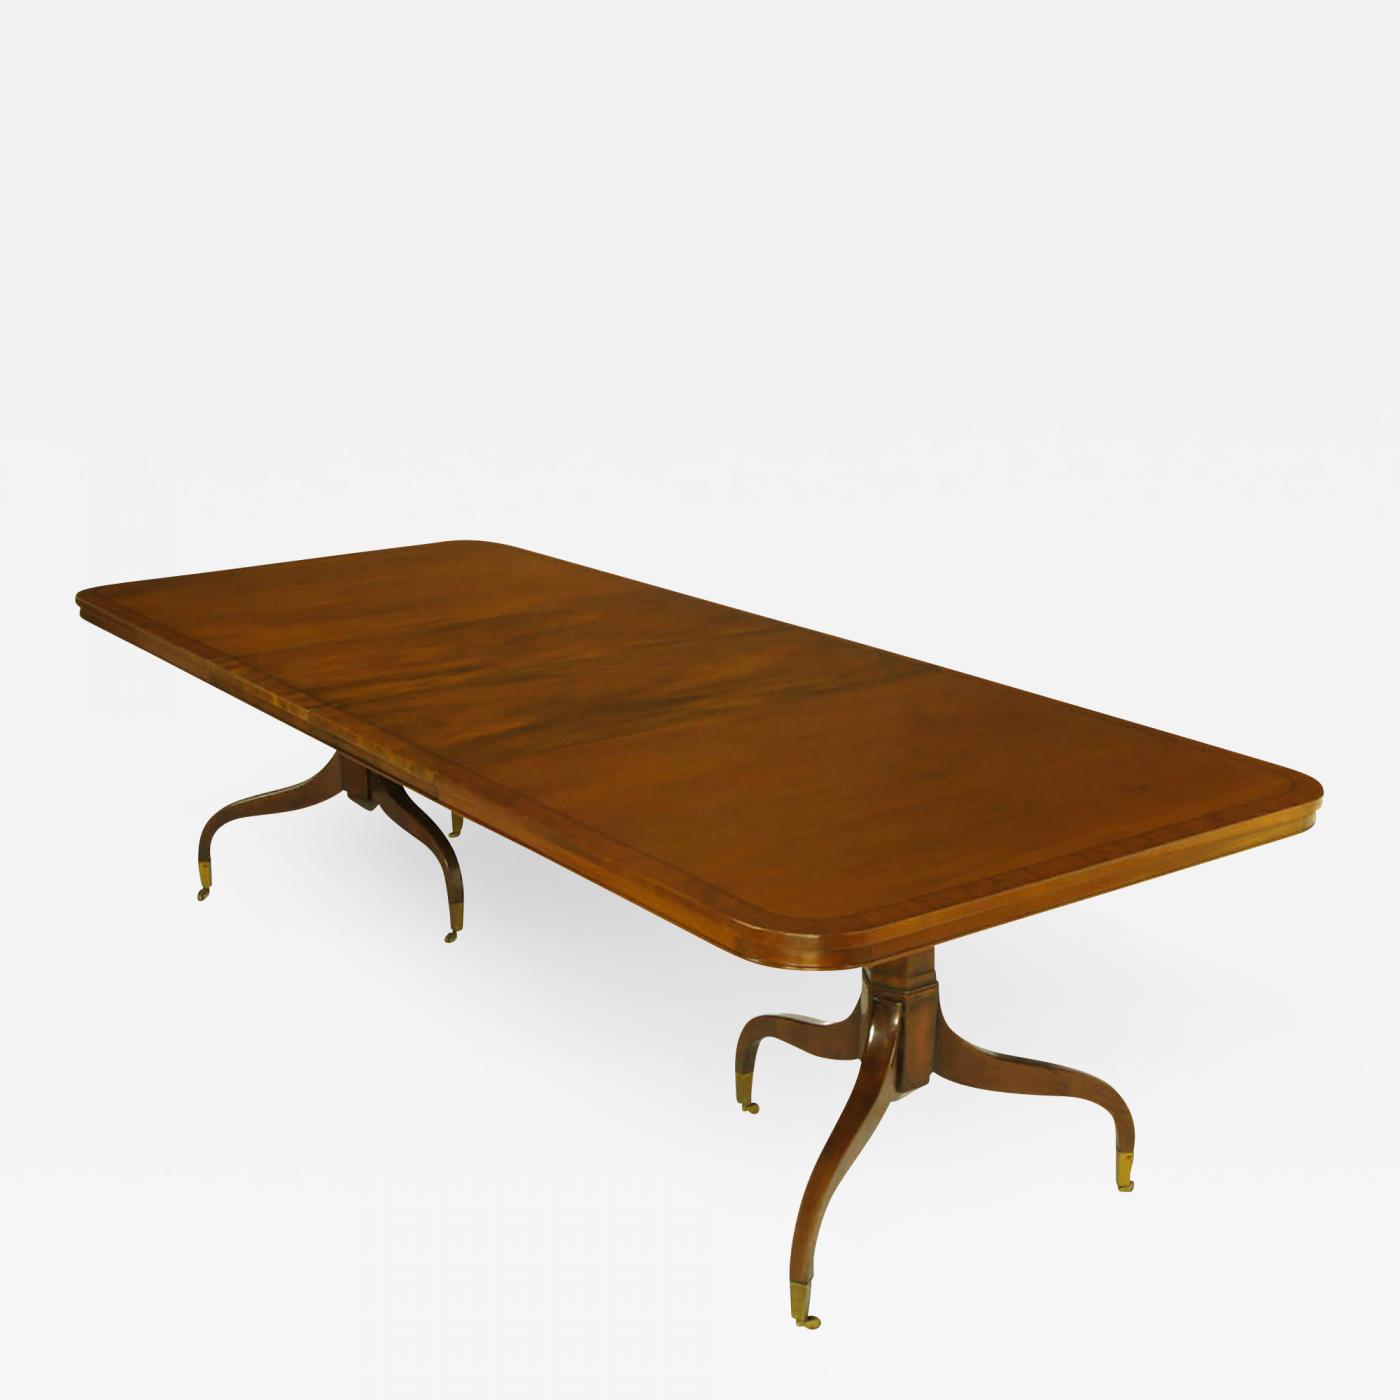 Kittinger Furniture Co Kittinger Mahogany Dining Table With Unusual Double Pedestal Base